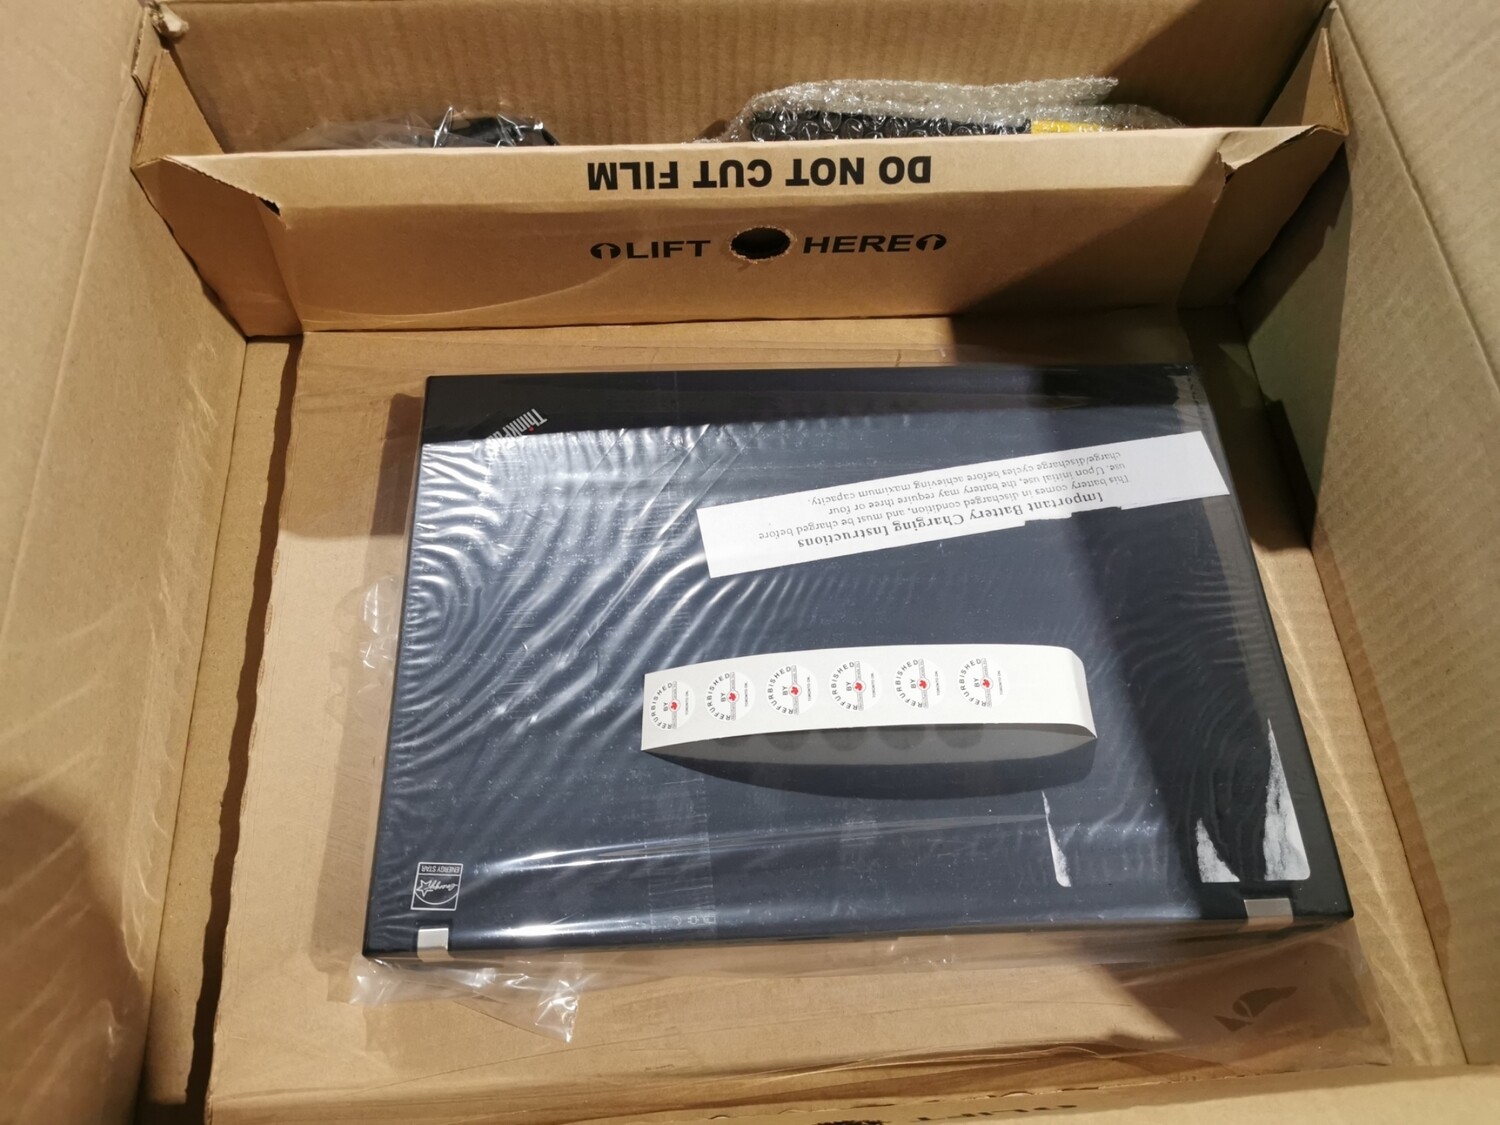 Lenovo ThinkPad T61 Core 2 Duo 2.0 GHz | 2GB | 160GB | 14" | 7659-AG8